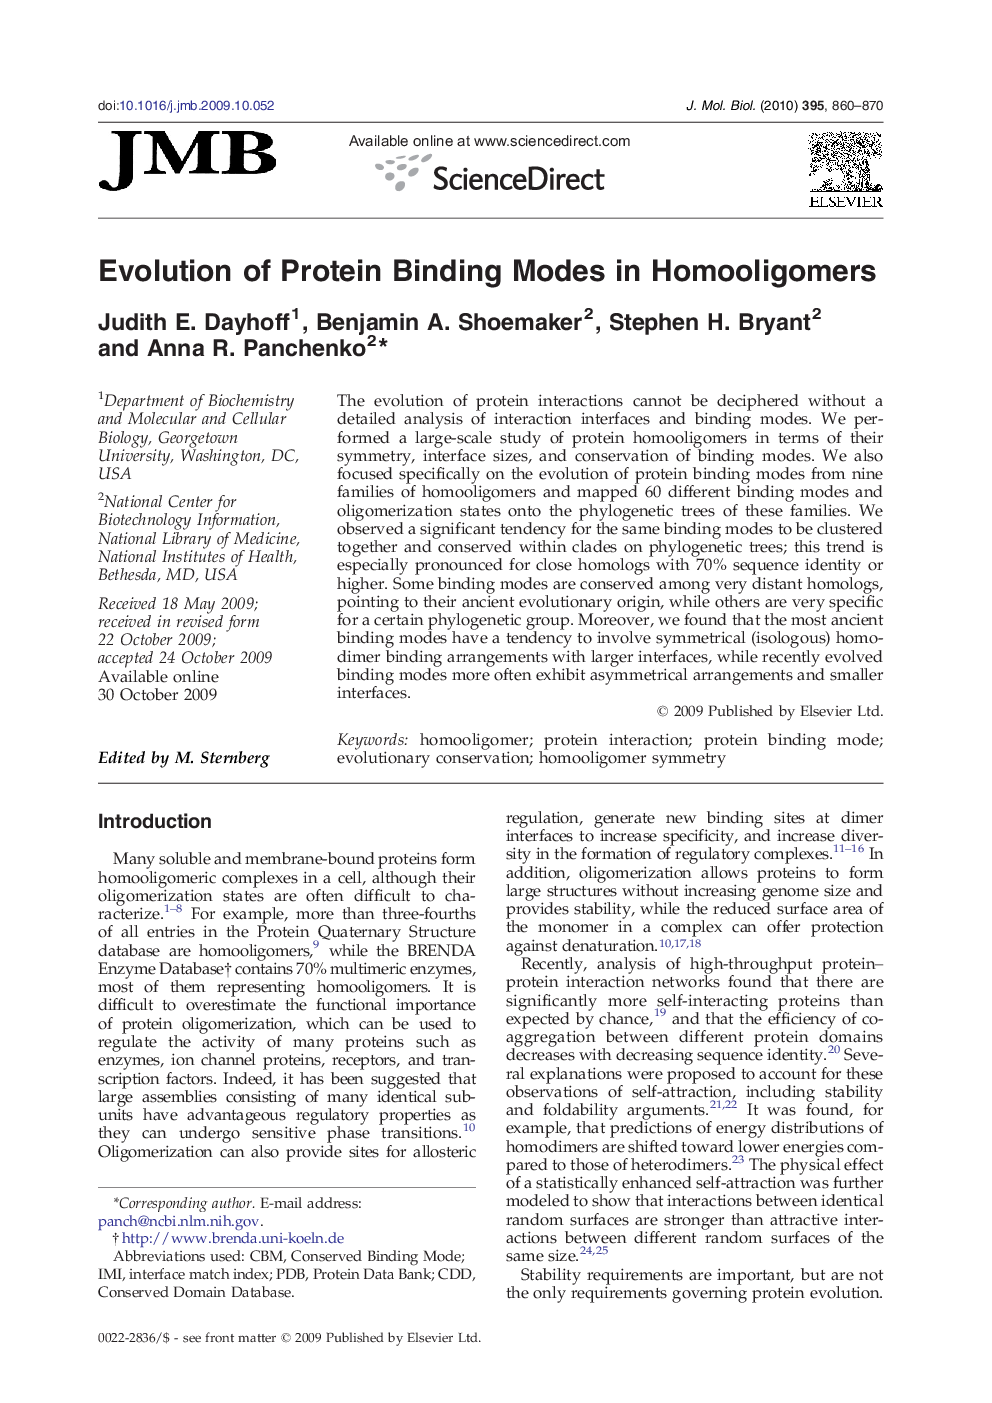 Evolution of Protein Binding Modes in Homooligomers